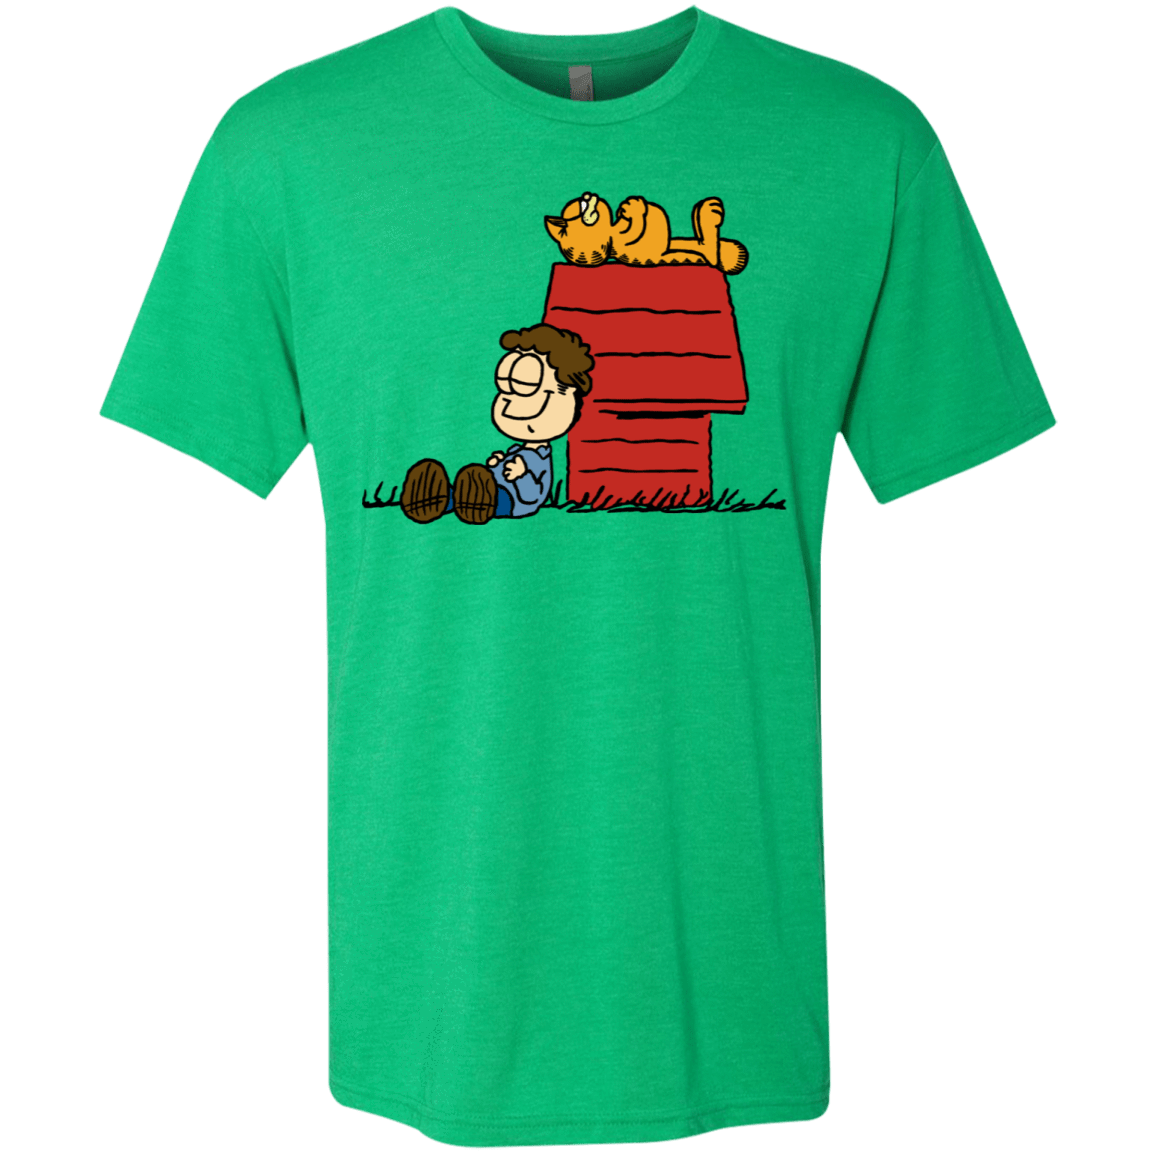 T-Shirts Envy / S Jon Brown Men's Triblend T-Shirt